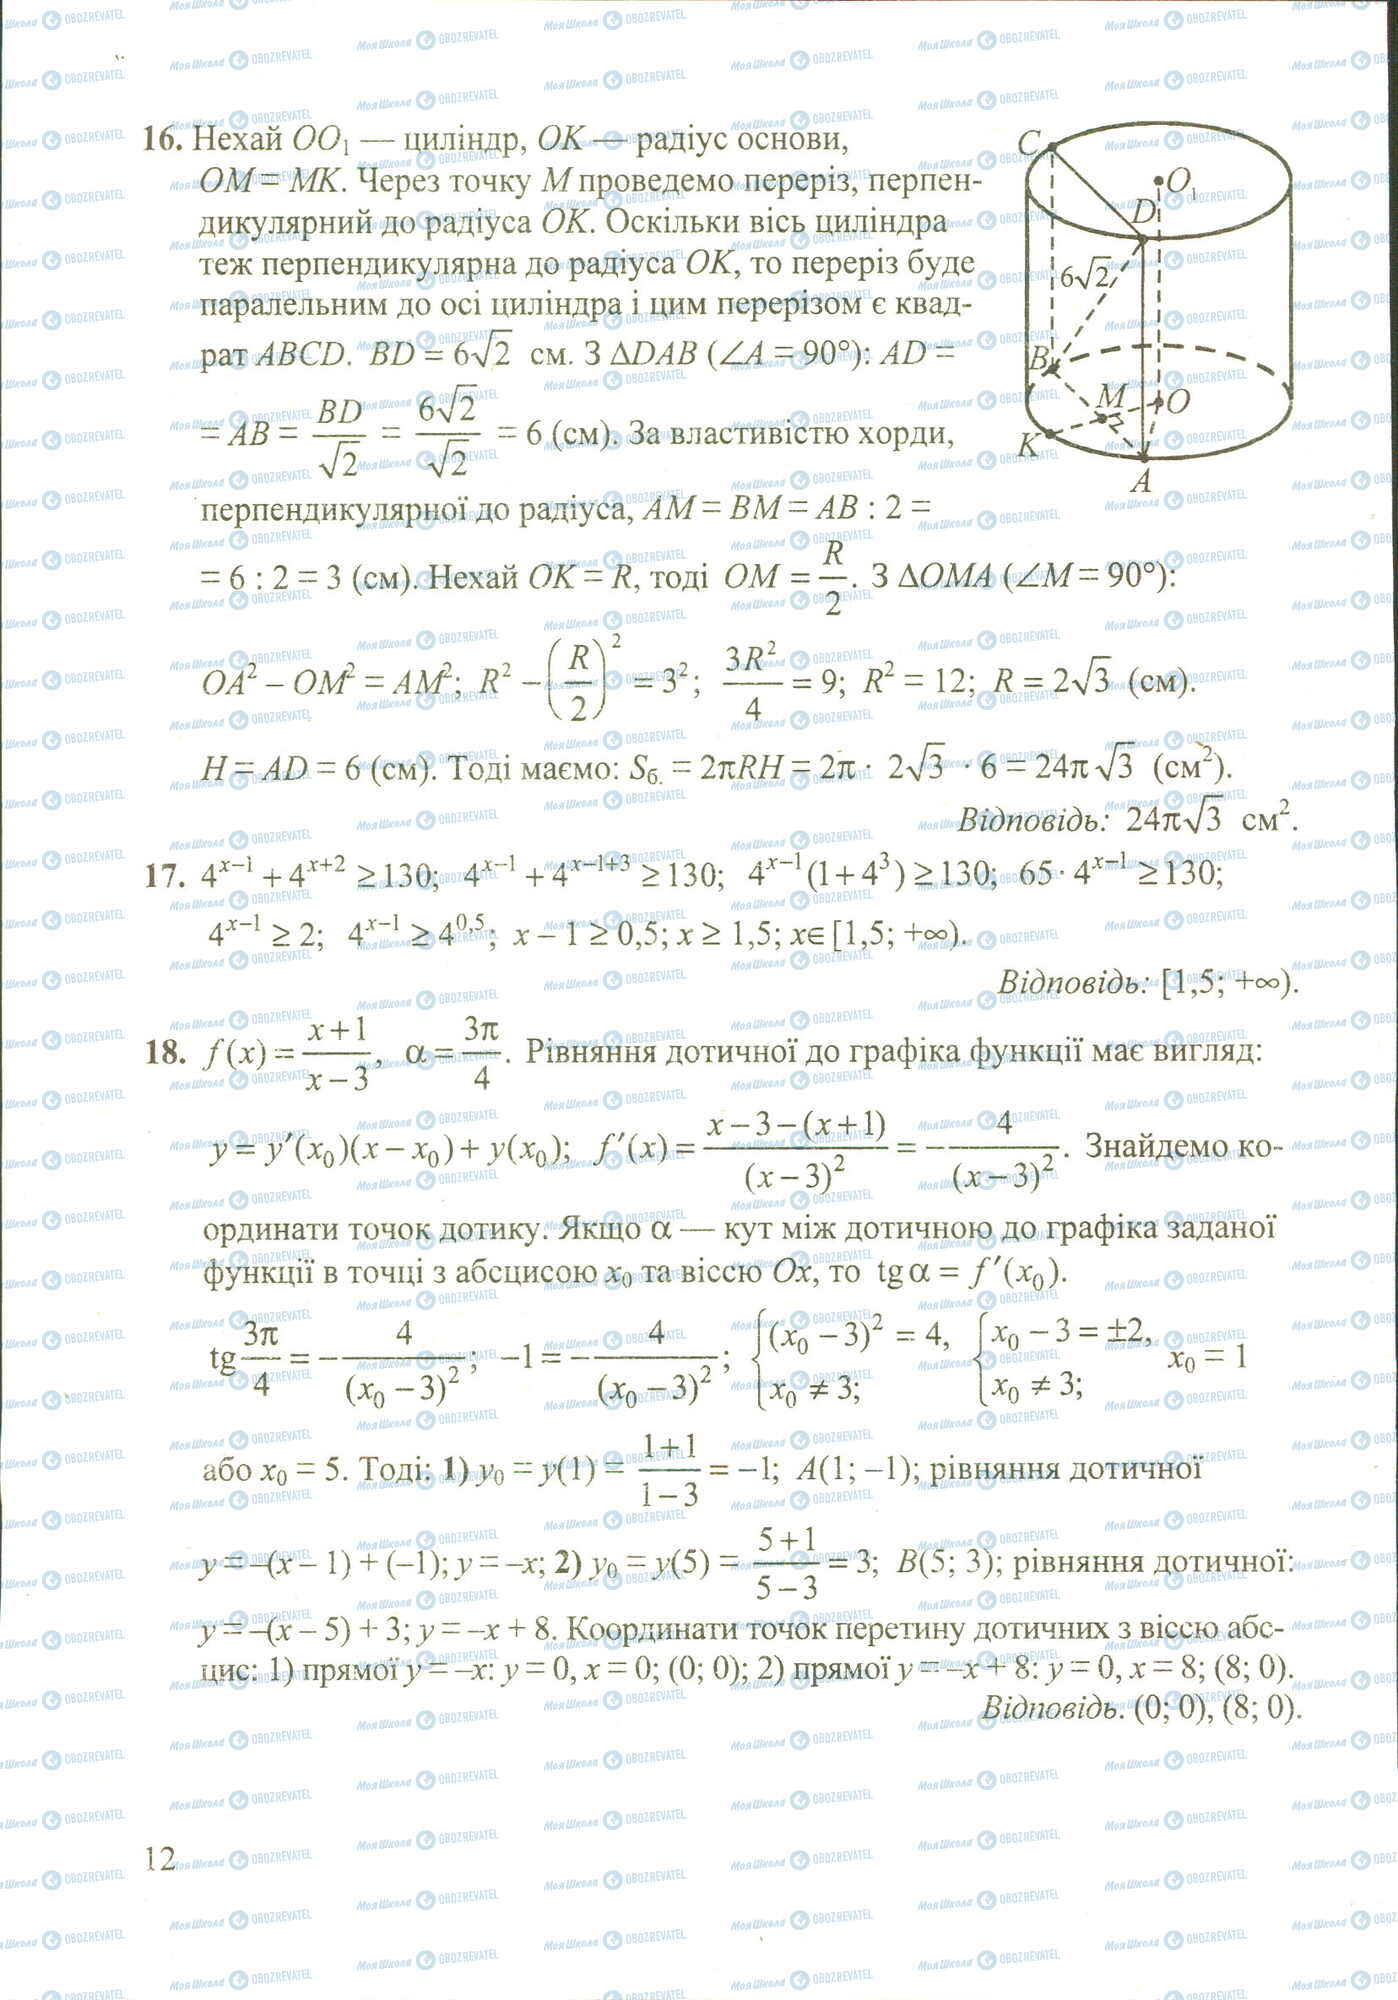 ДПА Математика 11 класс страница image0000005B